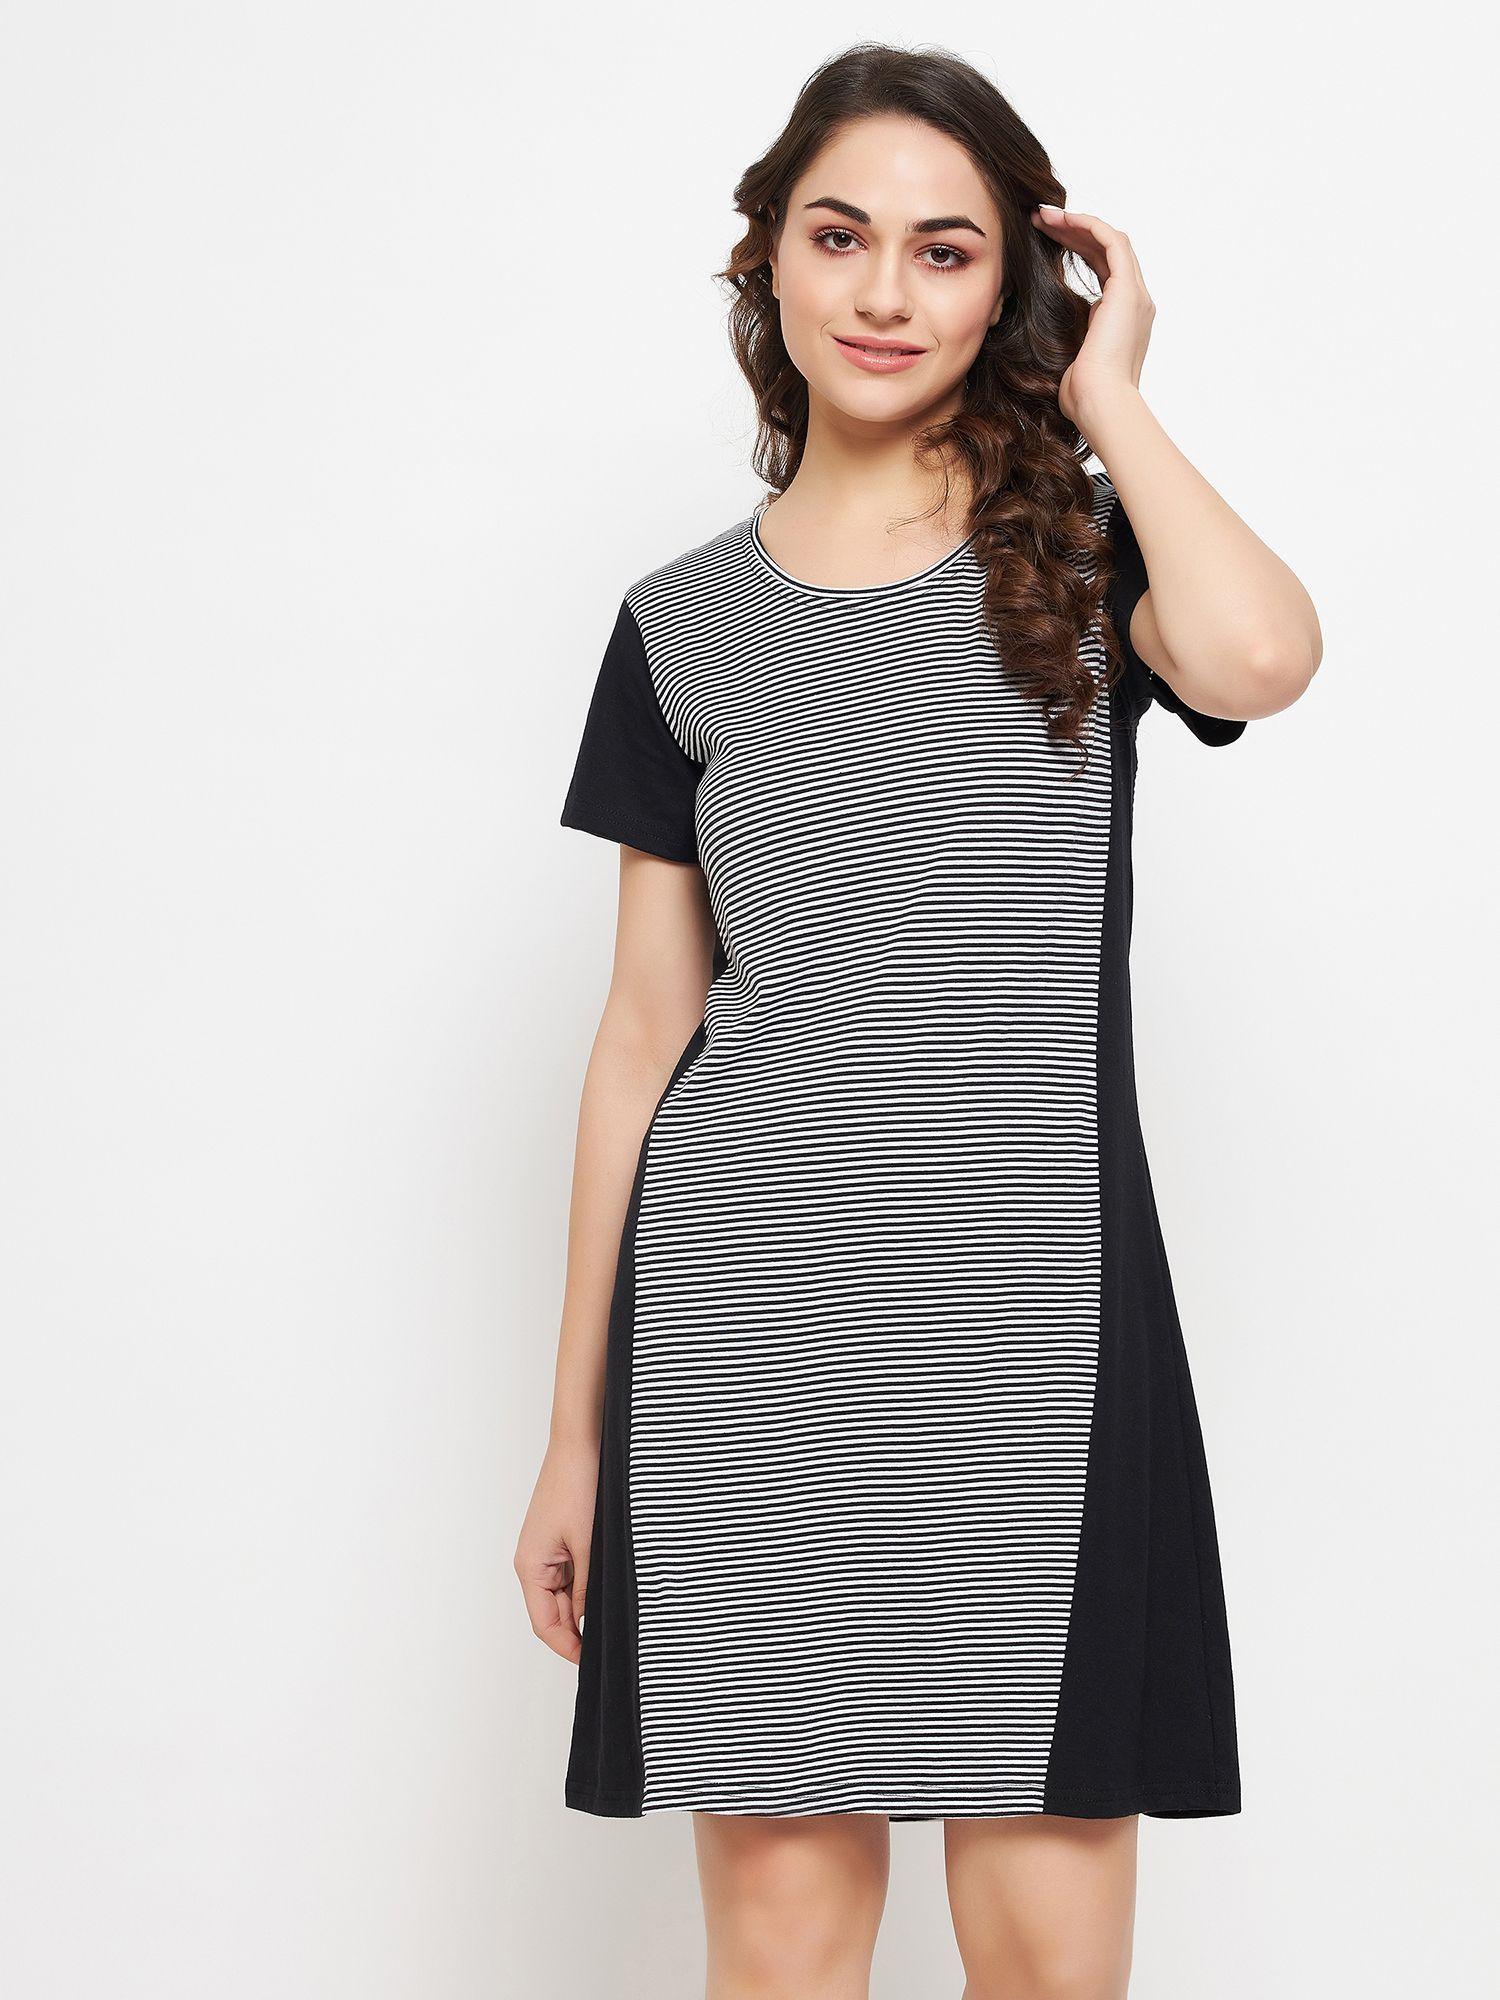 sassy stripes short night dress in black - 100 percent cotton